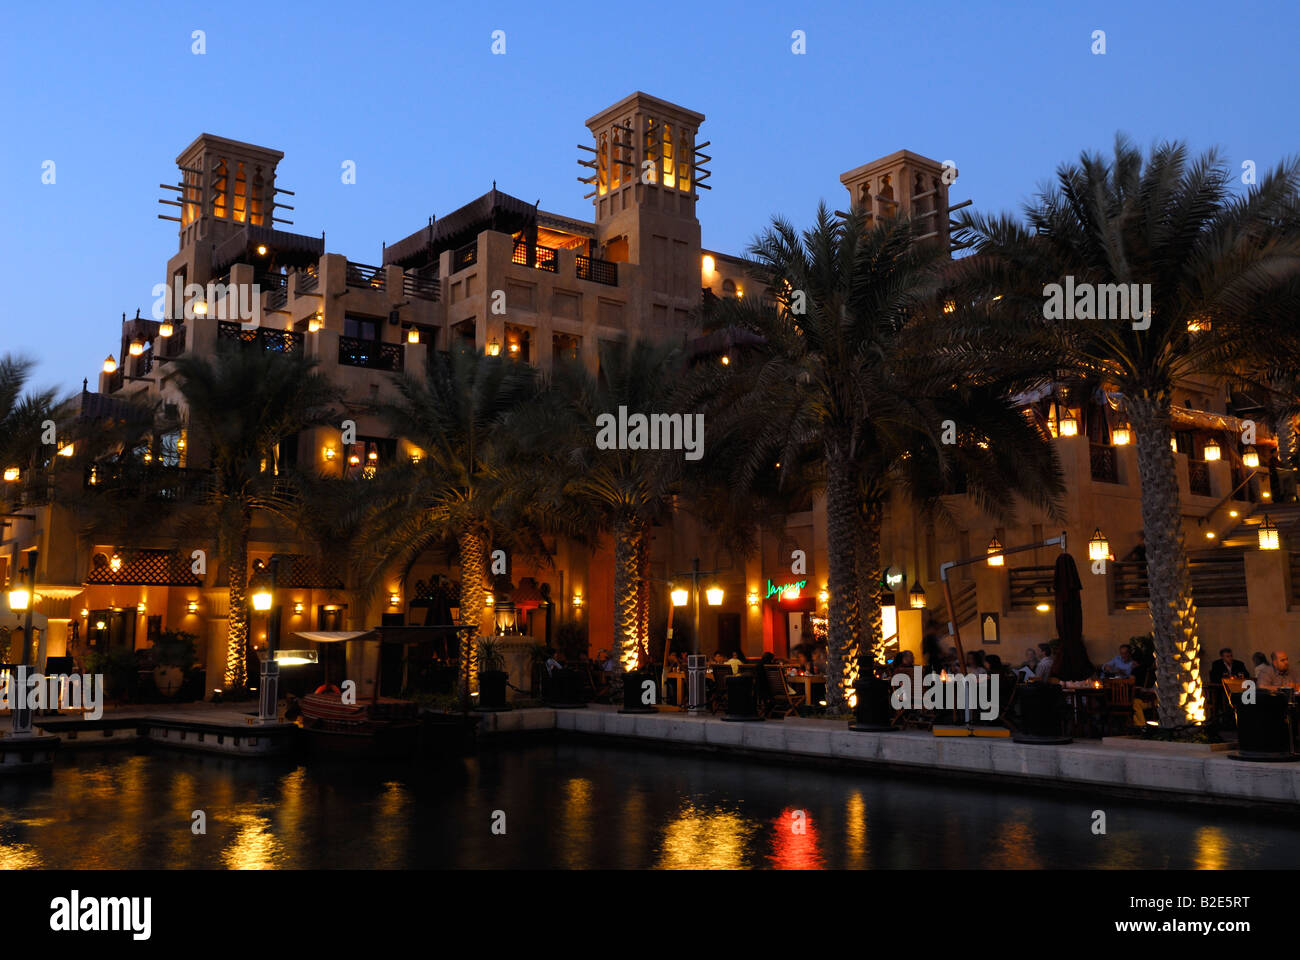 Mina a Salam Hotel at dusk Dubai United Arab Emirates Stock Photo